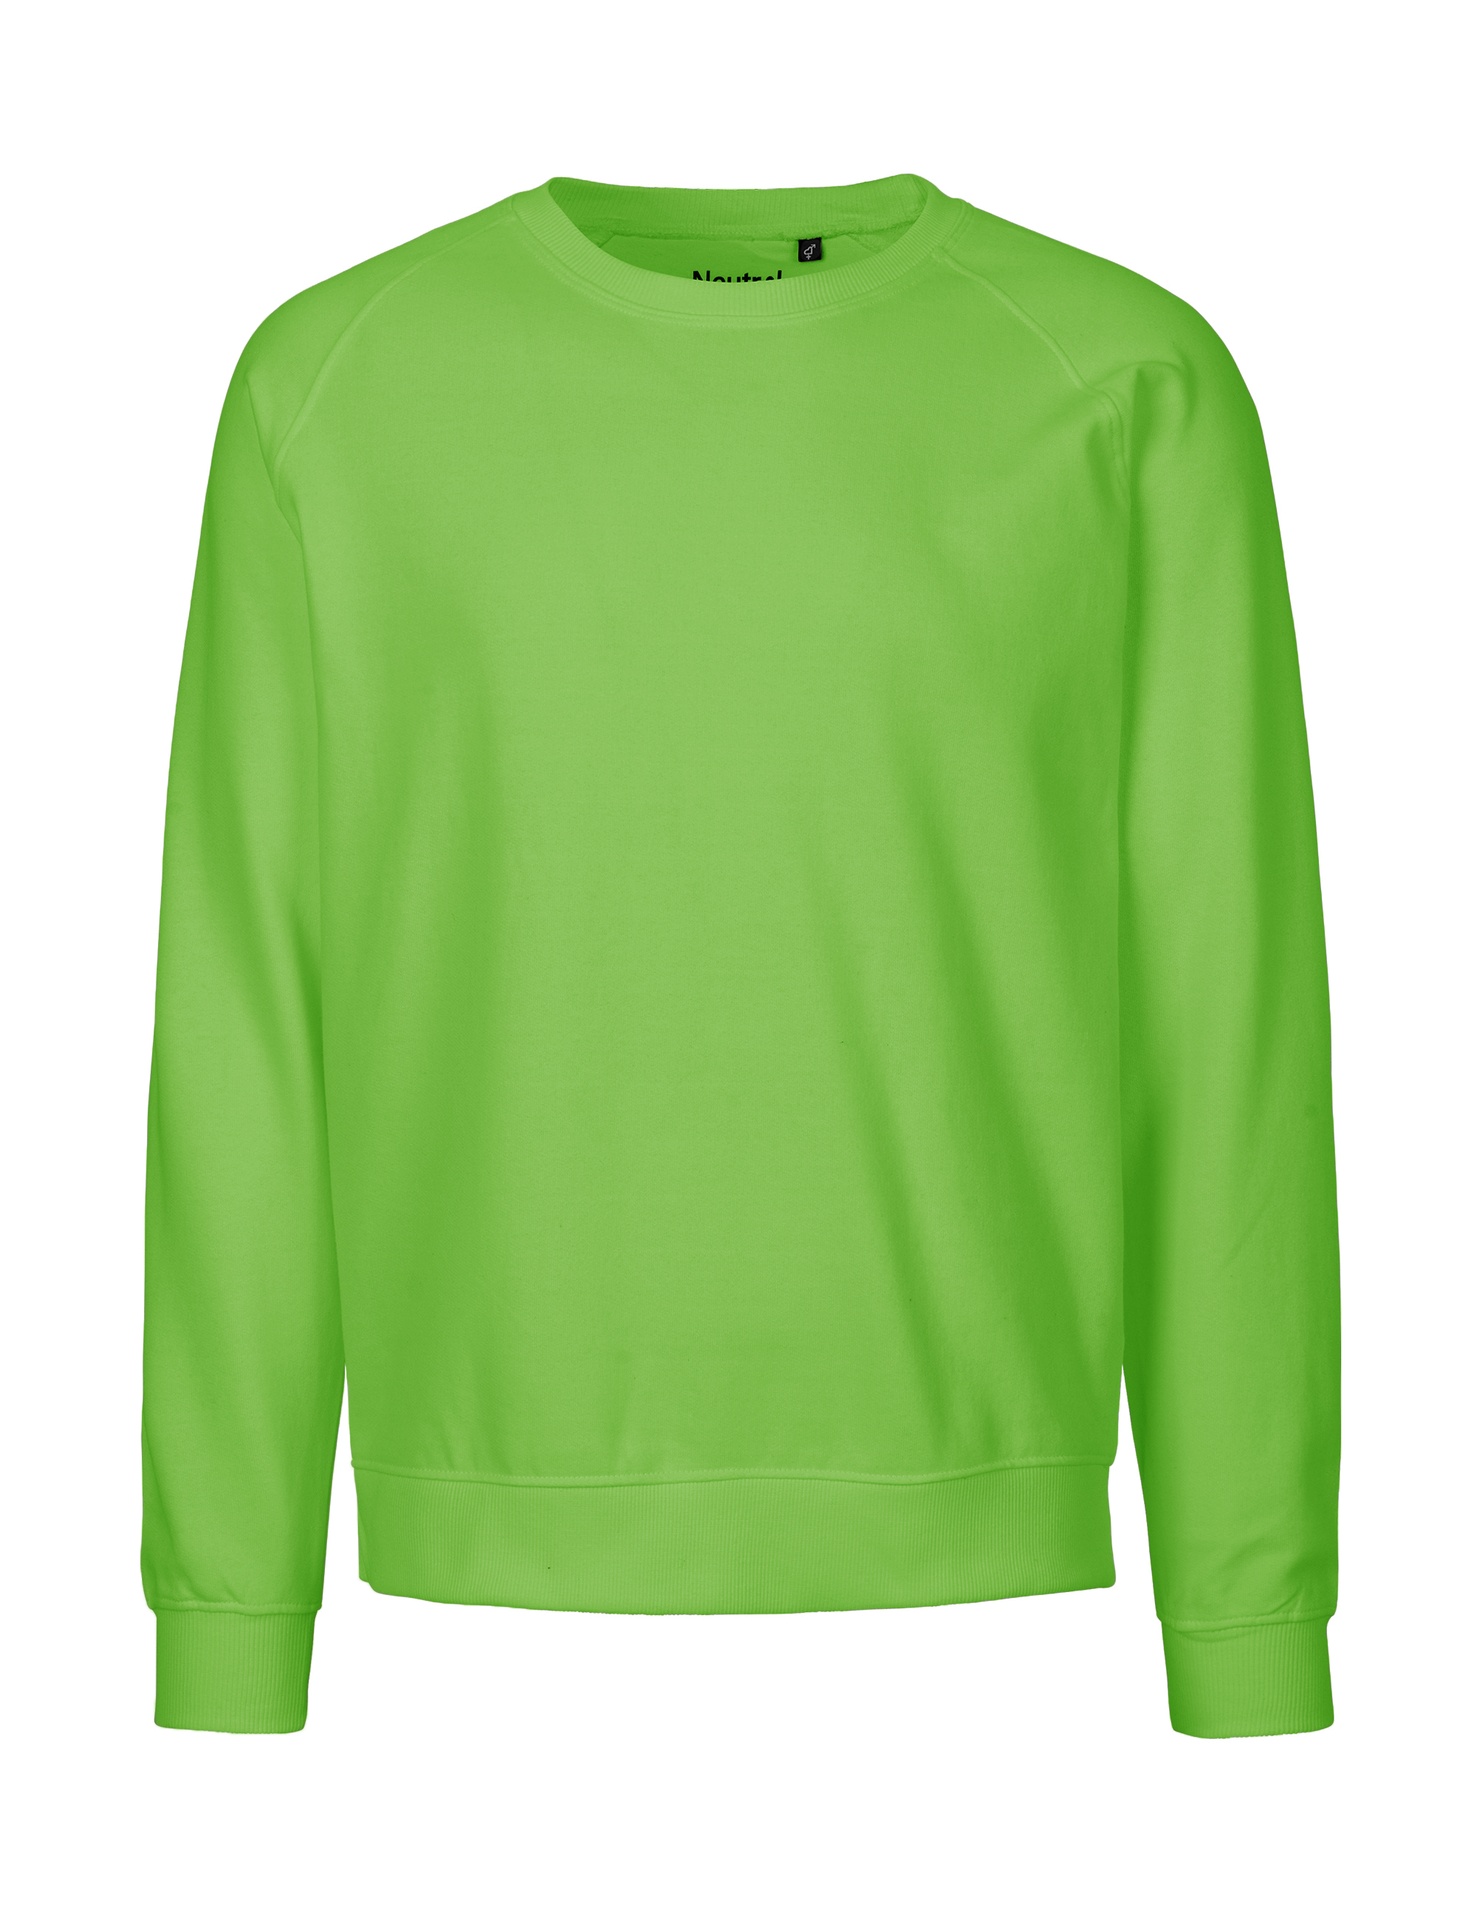 [PR/02716] Unisex Sweatshirt (Lime 12, S)